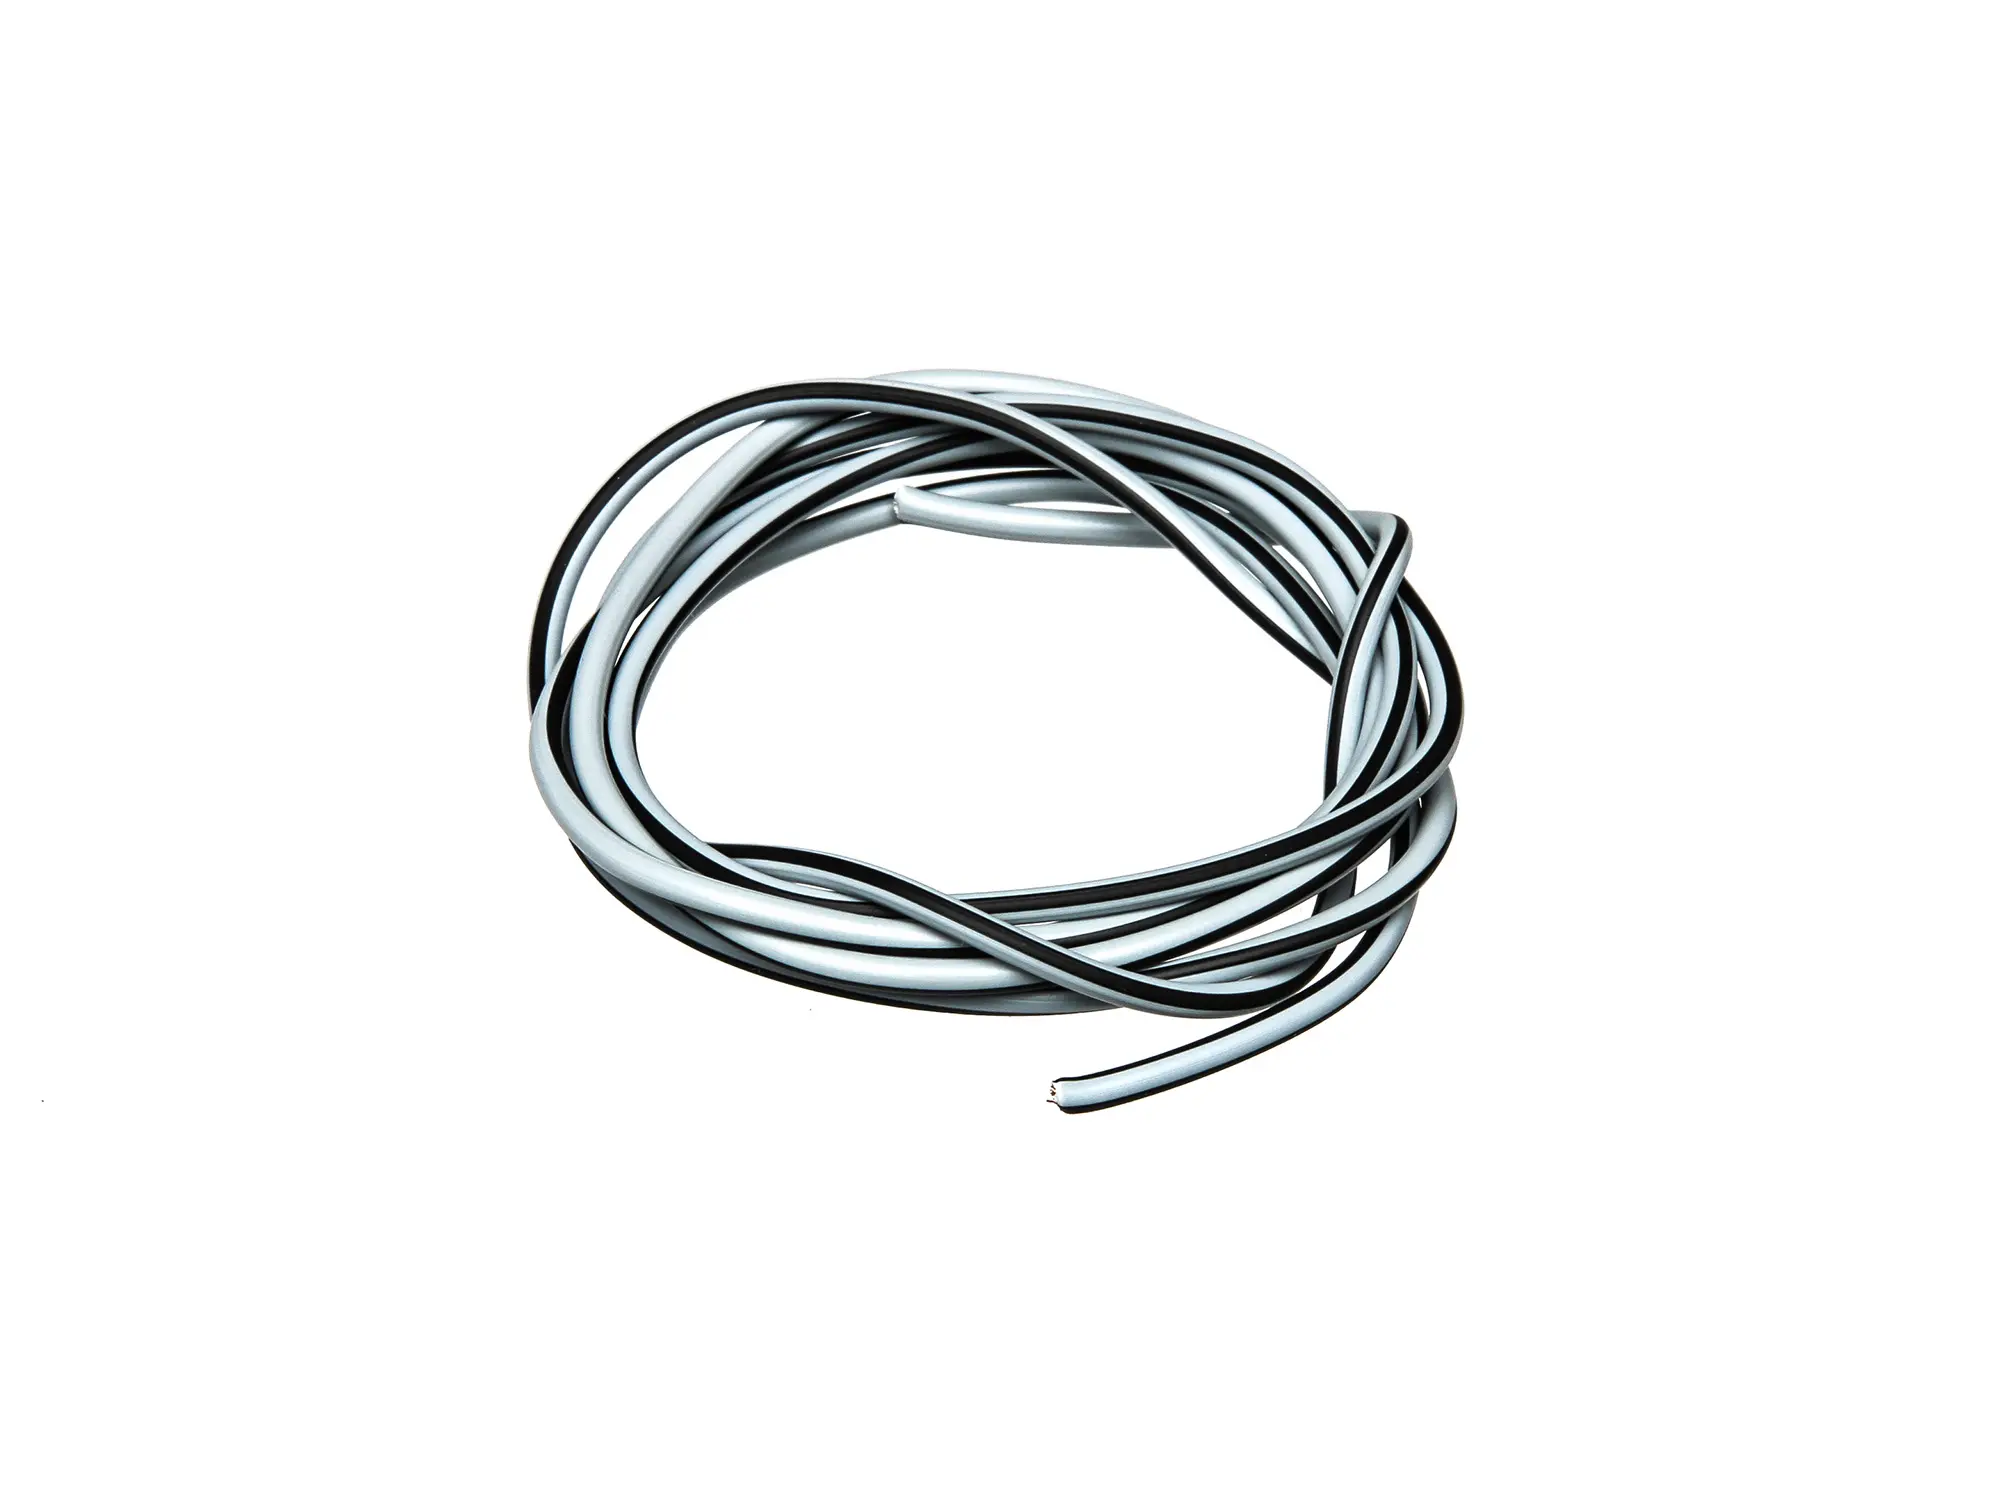 Kabel - Grau/Schwarz 0,50mm² Fahrzeugleitung - 1m, Art.-Nr.: 10001775 - Bild 1